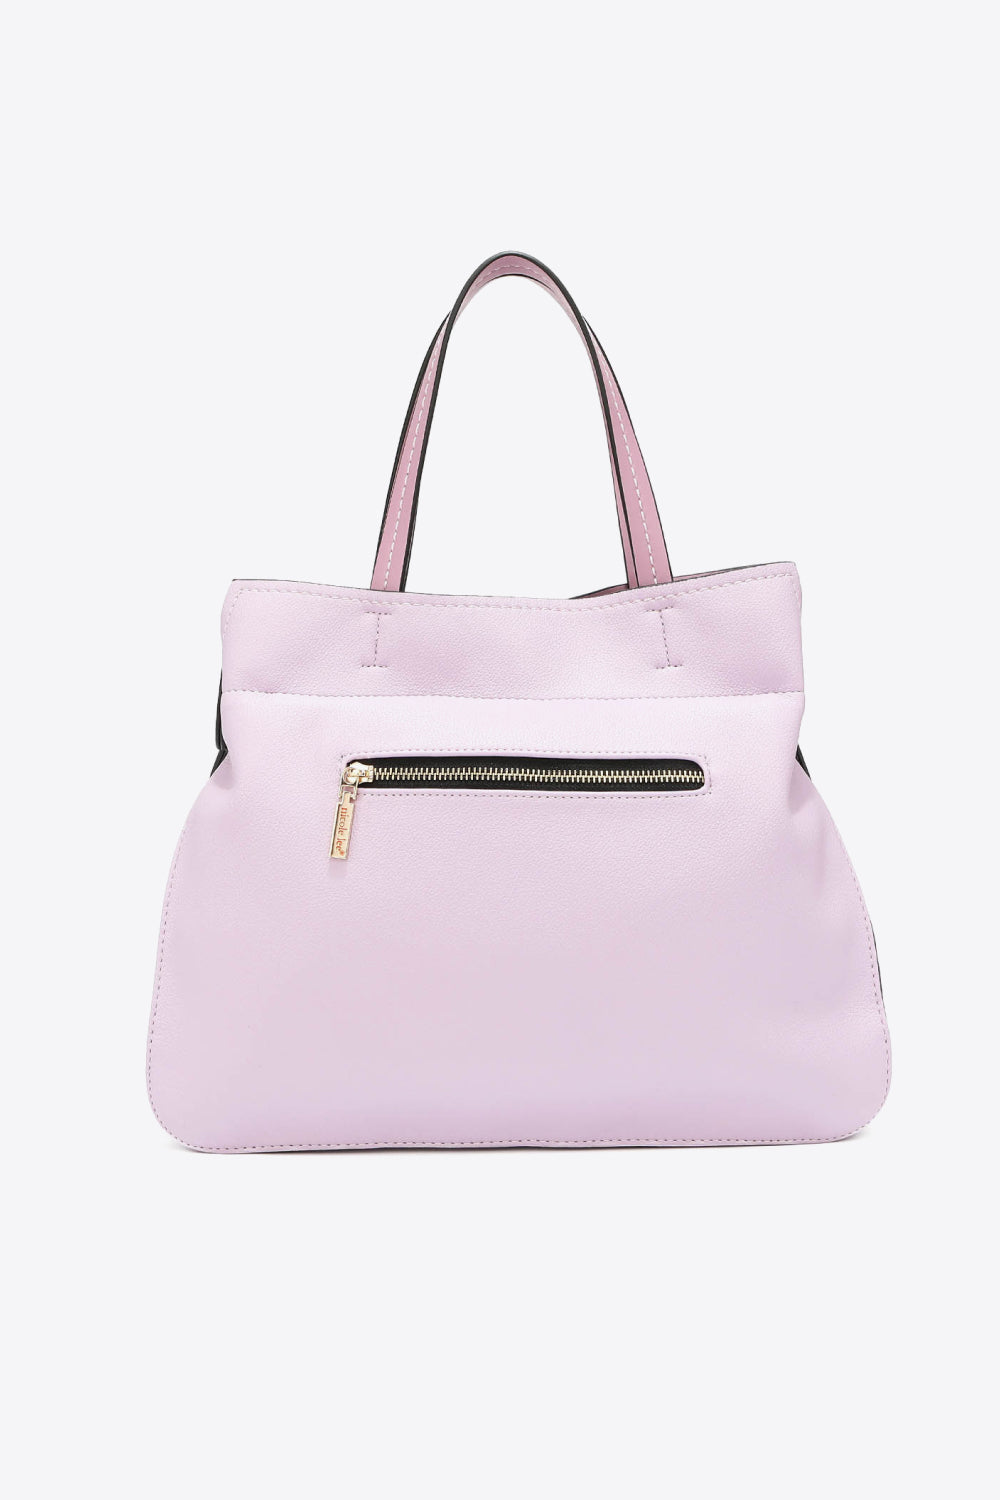 Minimalist Avery Shoulder Bag